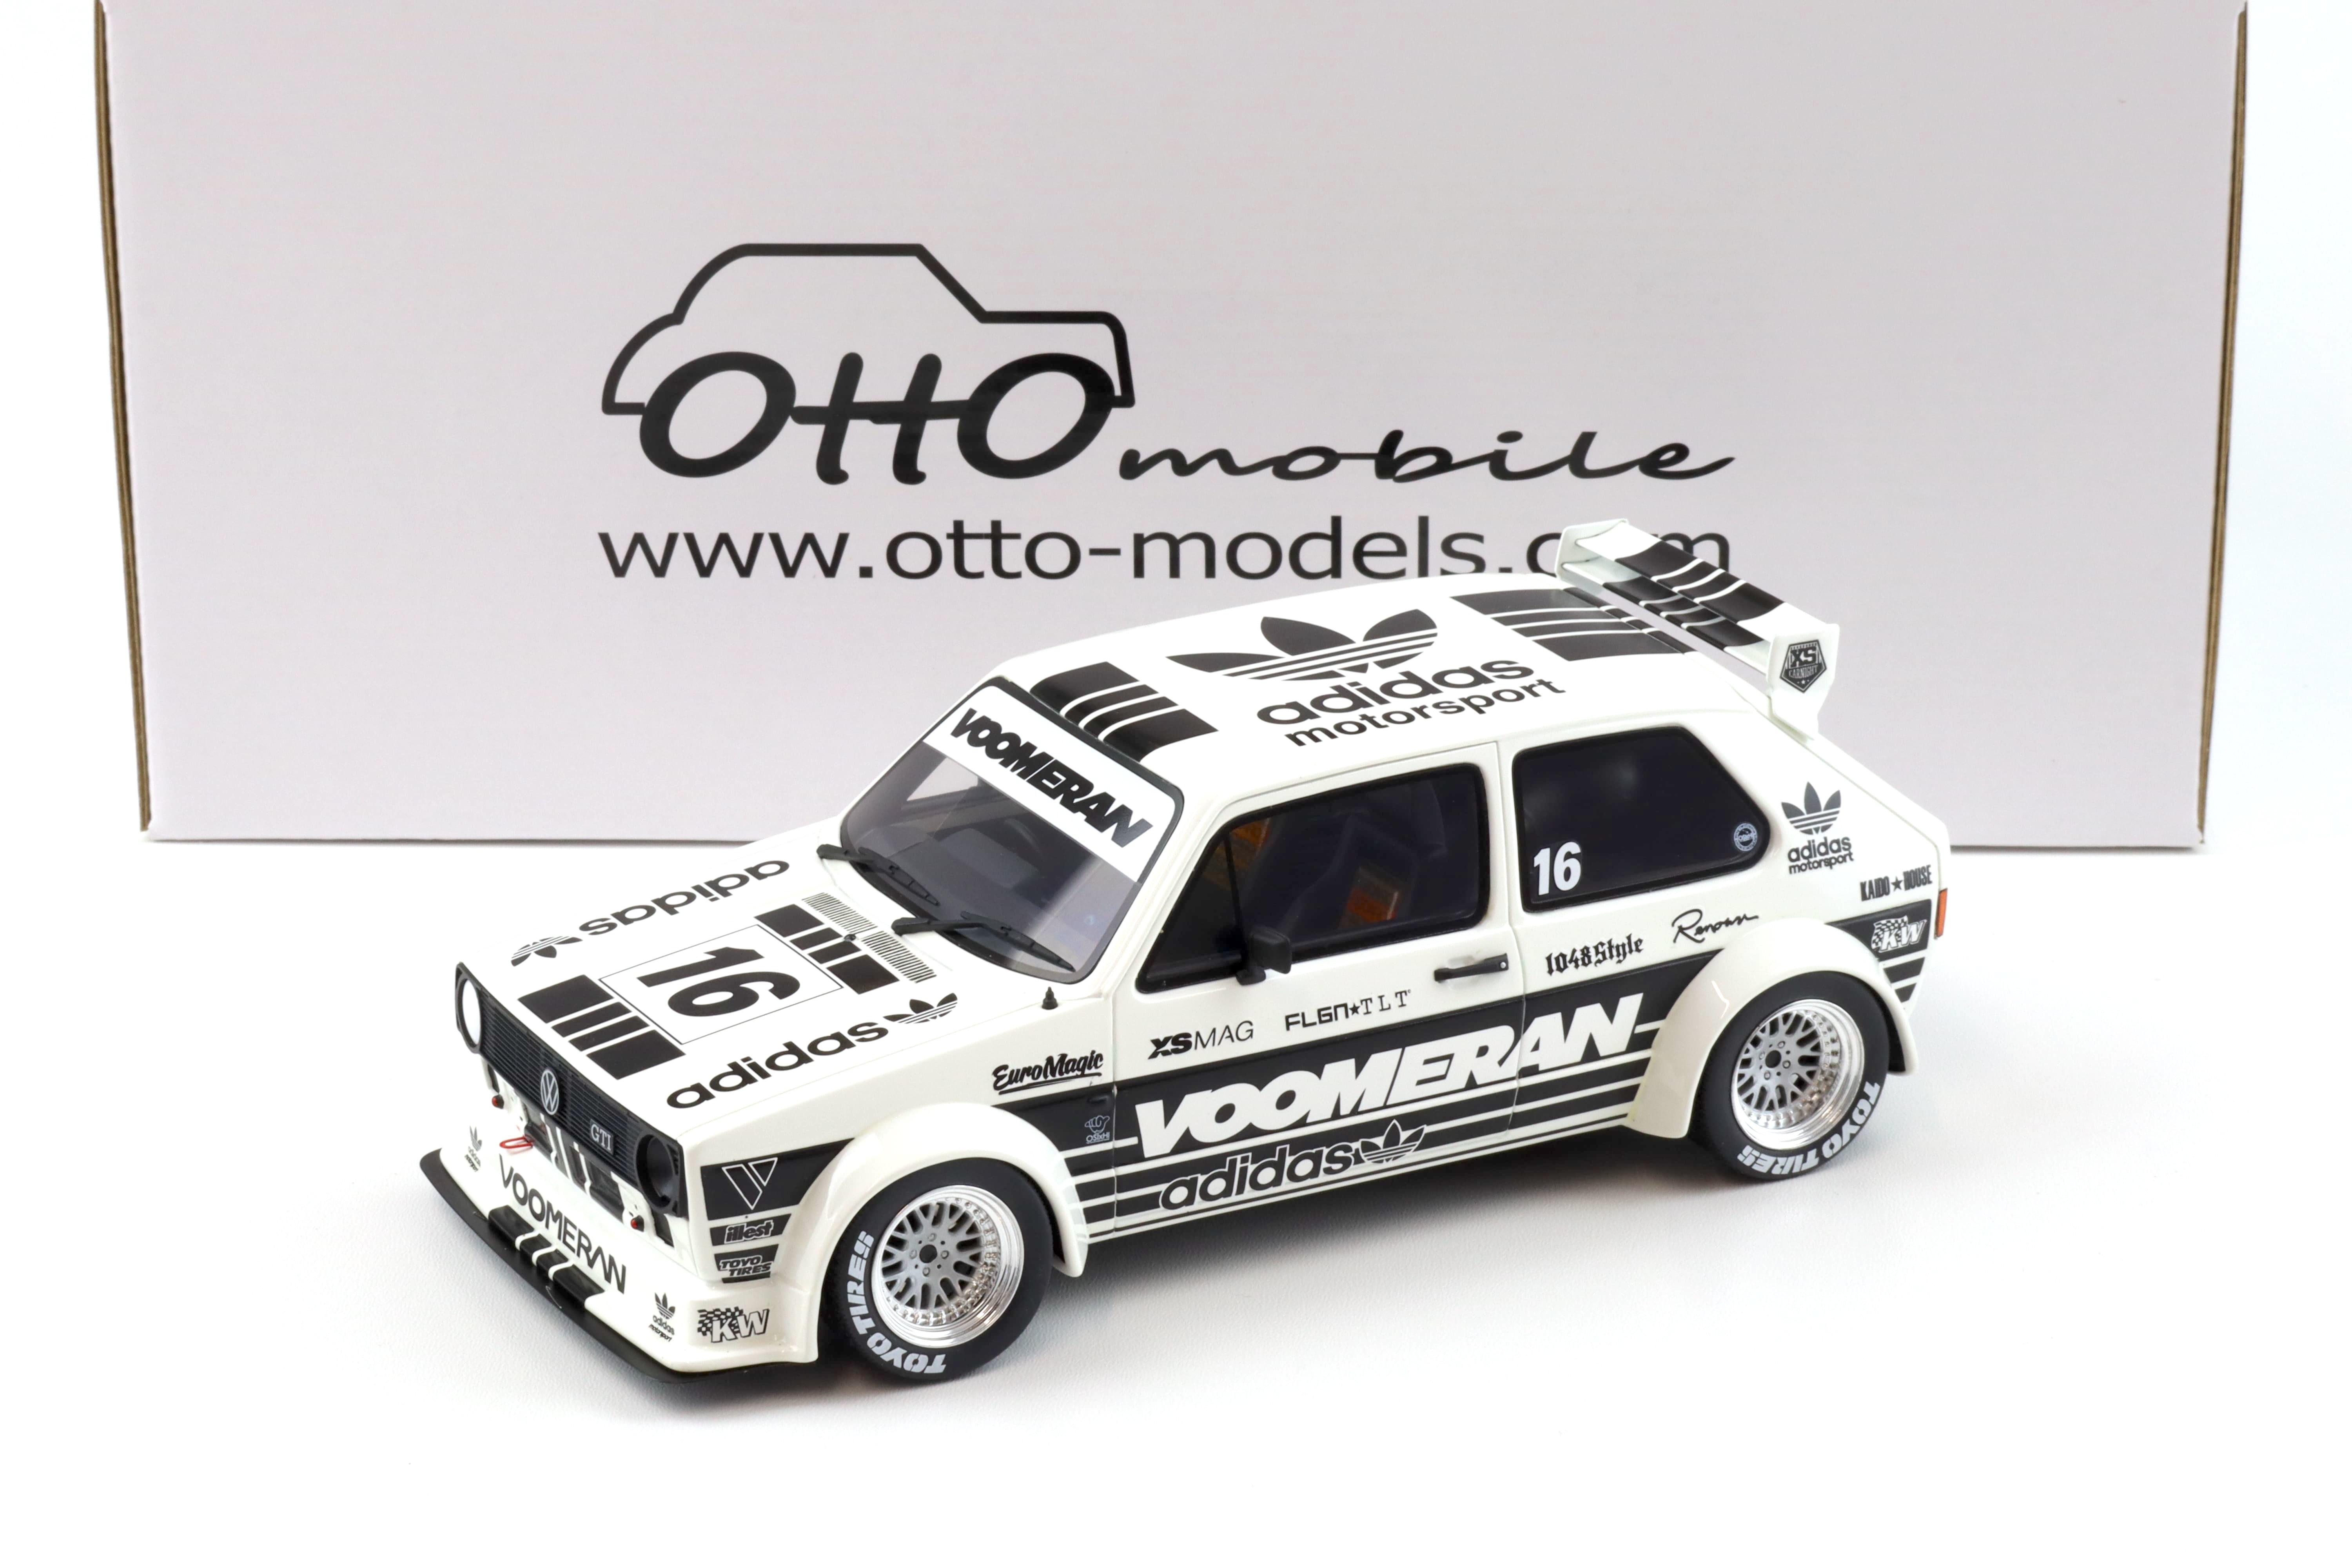 1:18 OTTO mobile OT1061 VW Golf 1 GTI Voomeran Tuners white 